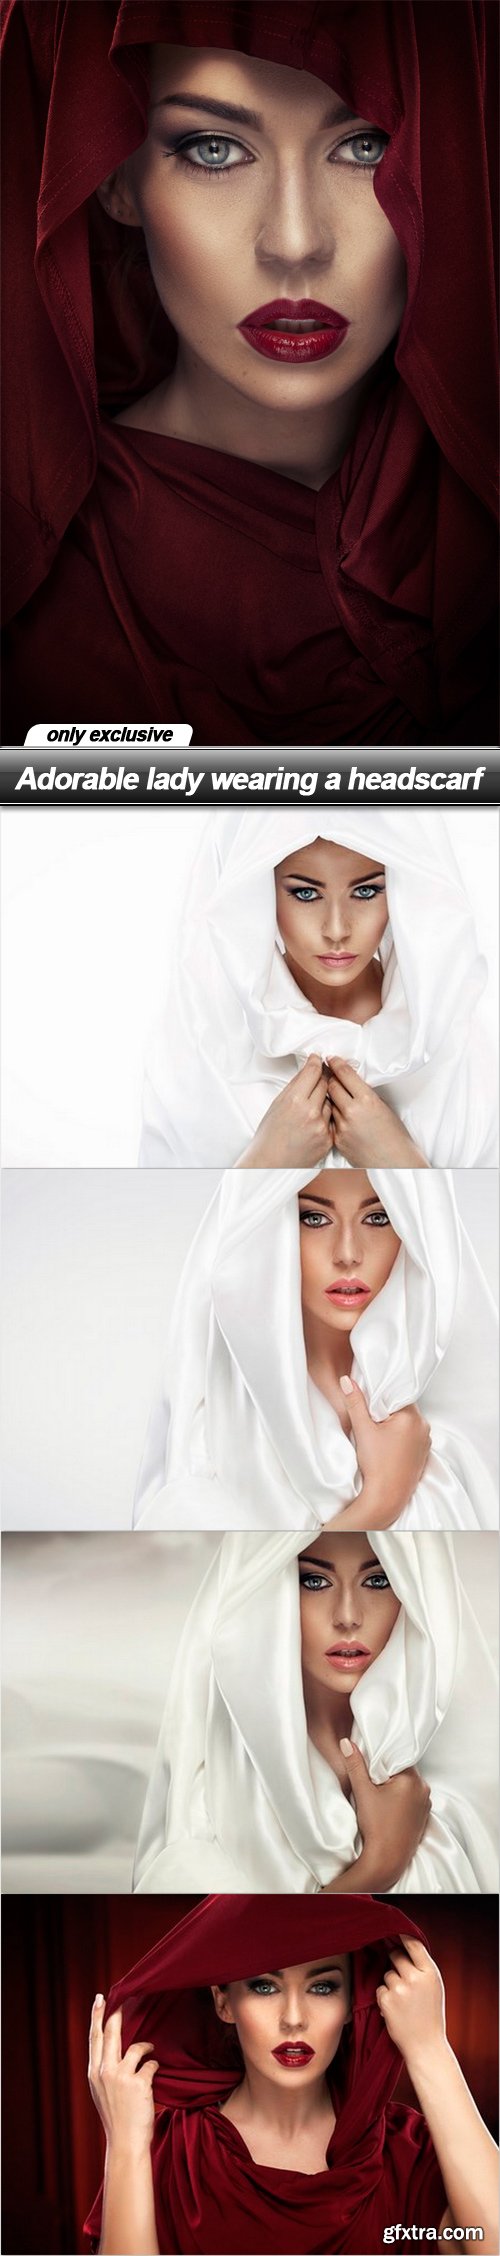 Adorable lady wearing a headscarf - 5 UHQ JPEG